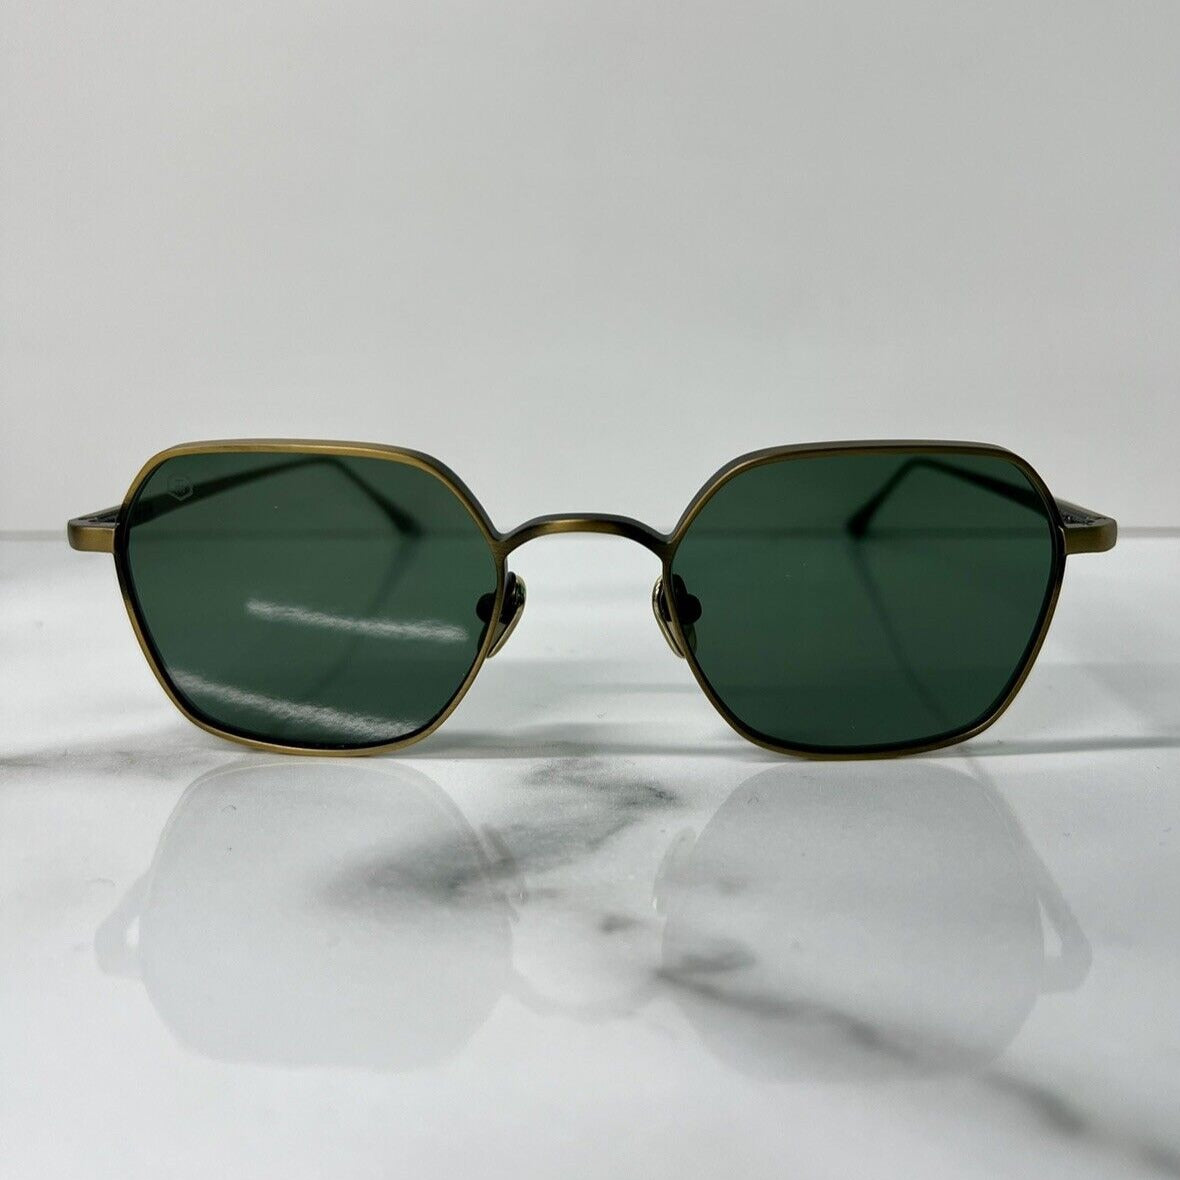 Taylor Morris Sunglasses Walton 32097 C2 gold green geometric glasses